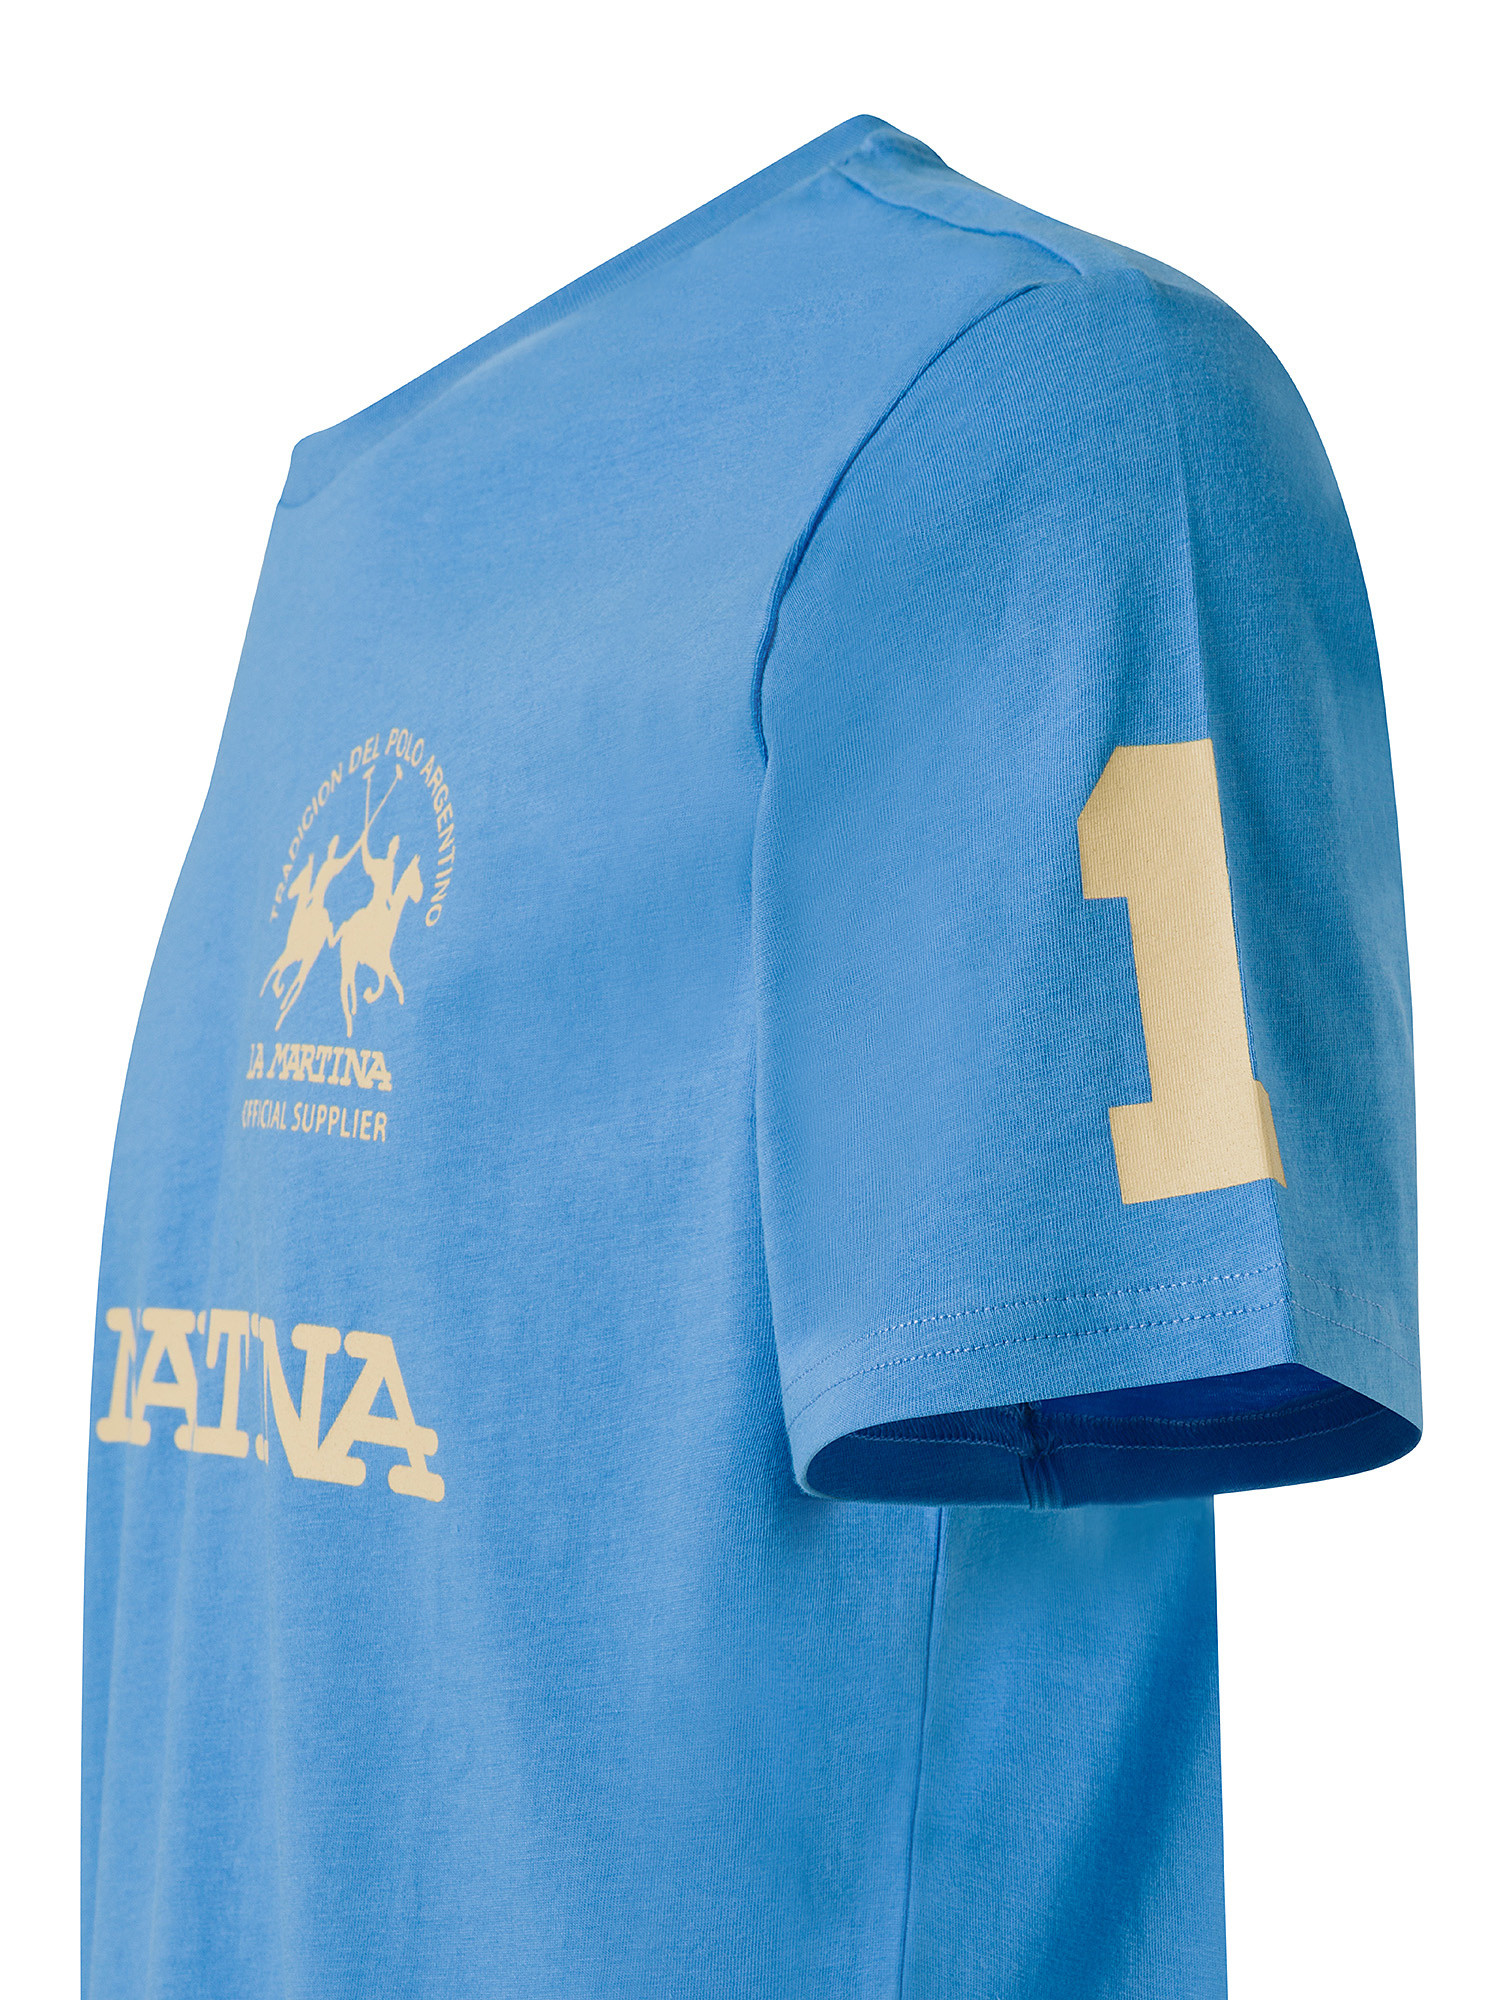 La Martina - T-shirt maniche corte in cotone jersey, Blu, large image number 2